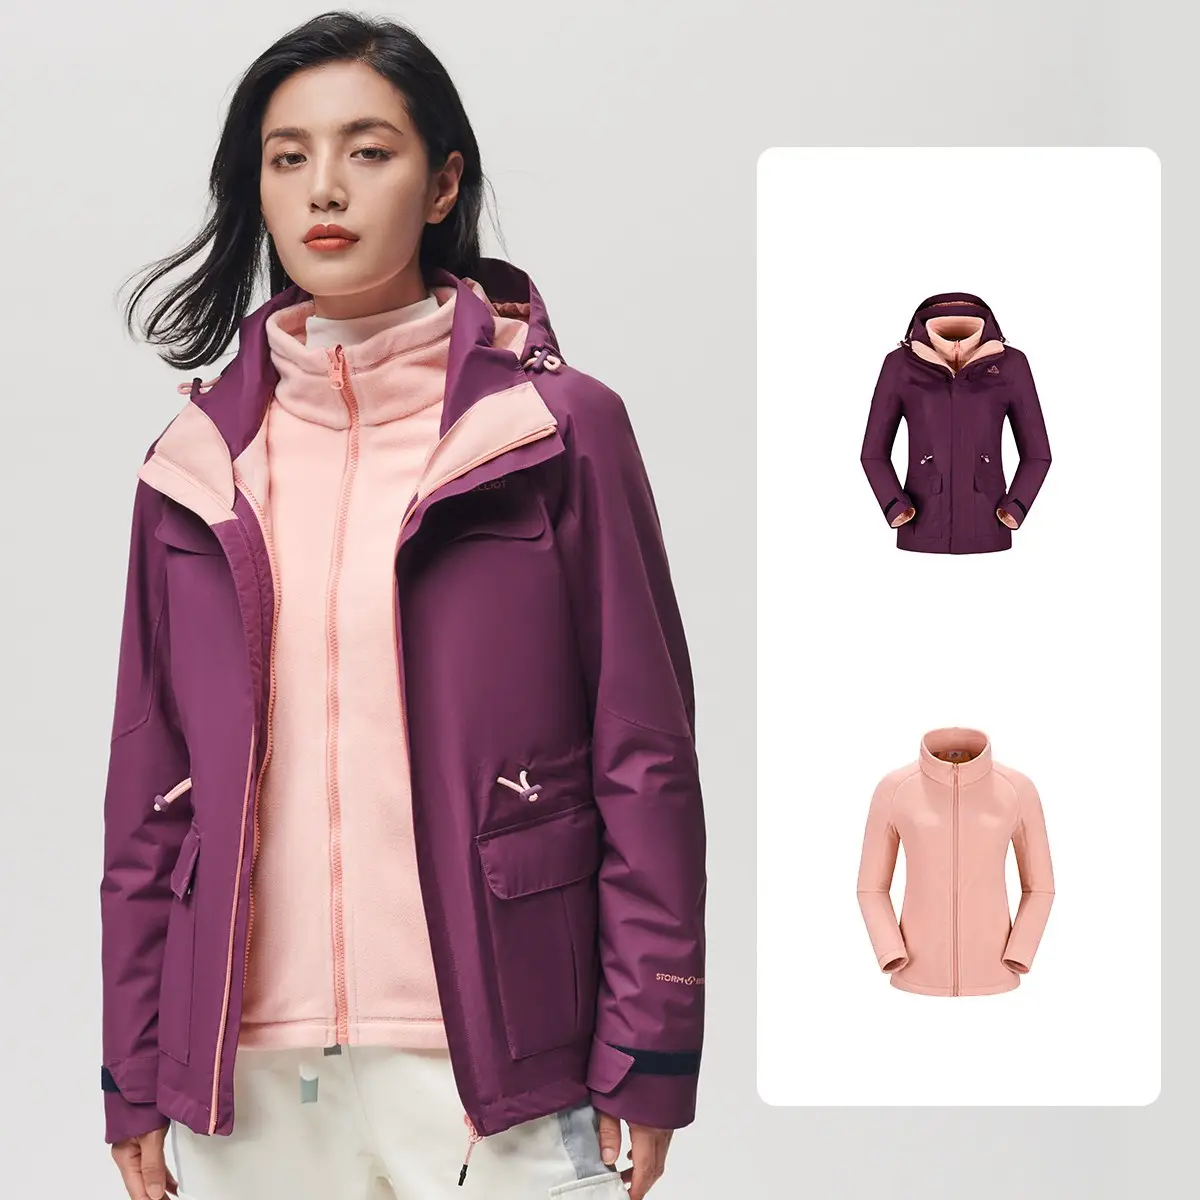 कस्टम लोगो फैशन पर्यावरण के अनुकूल नई स्टाइलिश windproof बारिश जैकेट निविड़ अंधकार सर्दियों जैकेट महिलाओं के लिए hardshell जैकेट